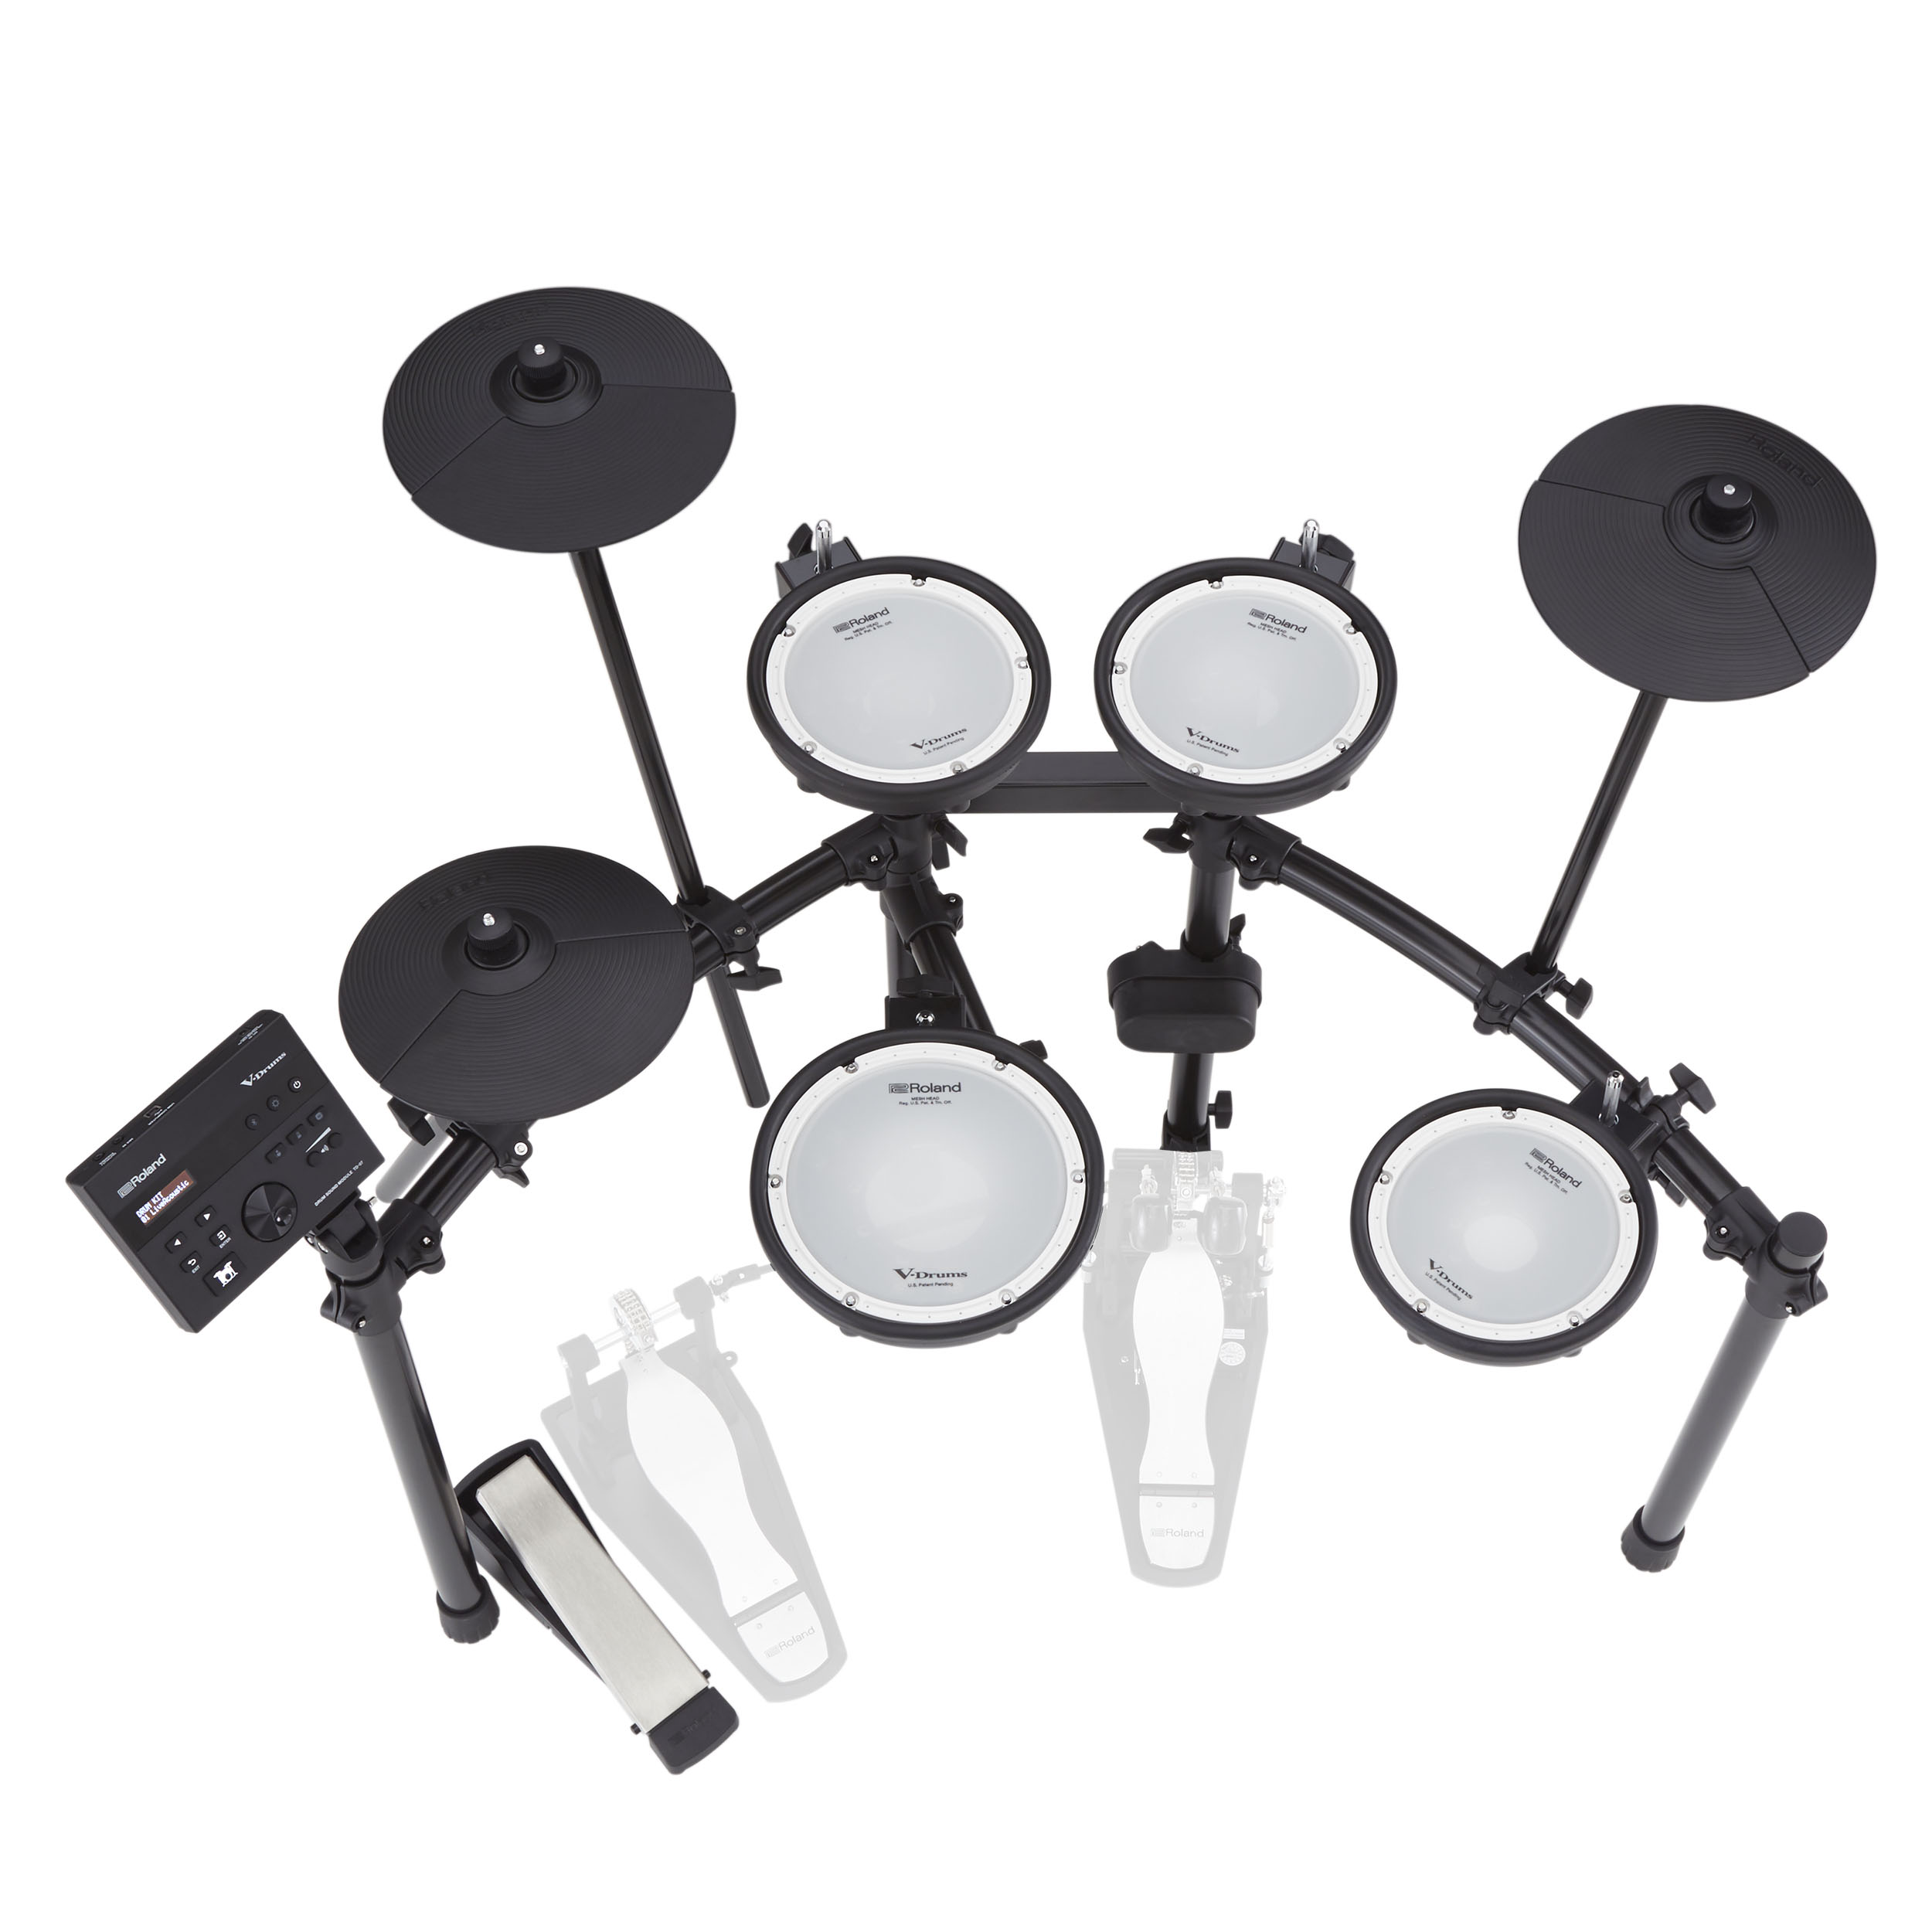 Roland Td-07dmk V-drums Kit - Batería electrónica completa - Variation 2